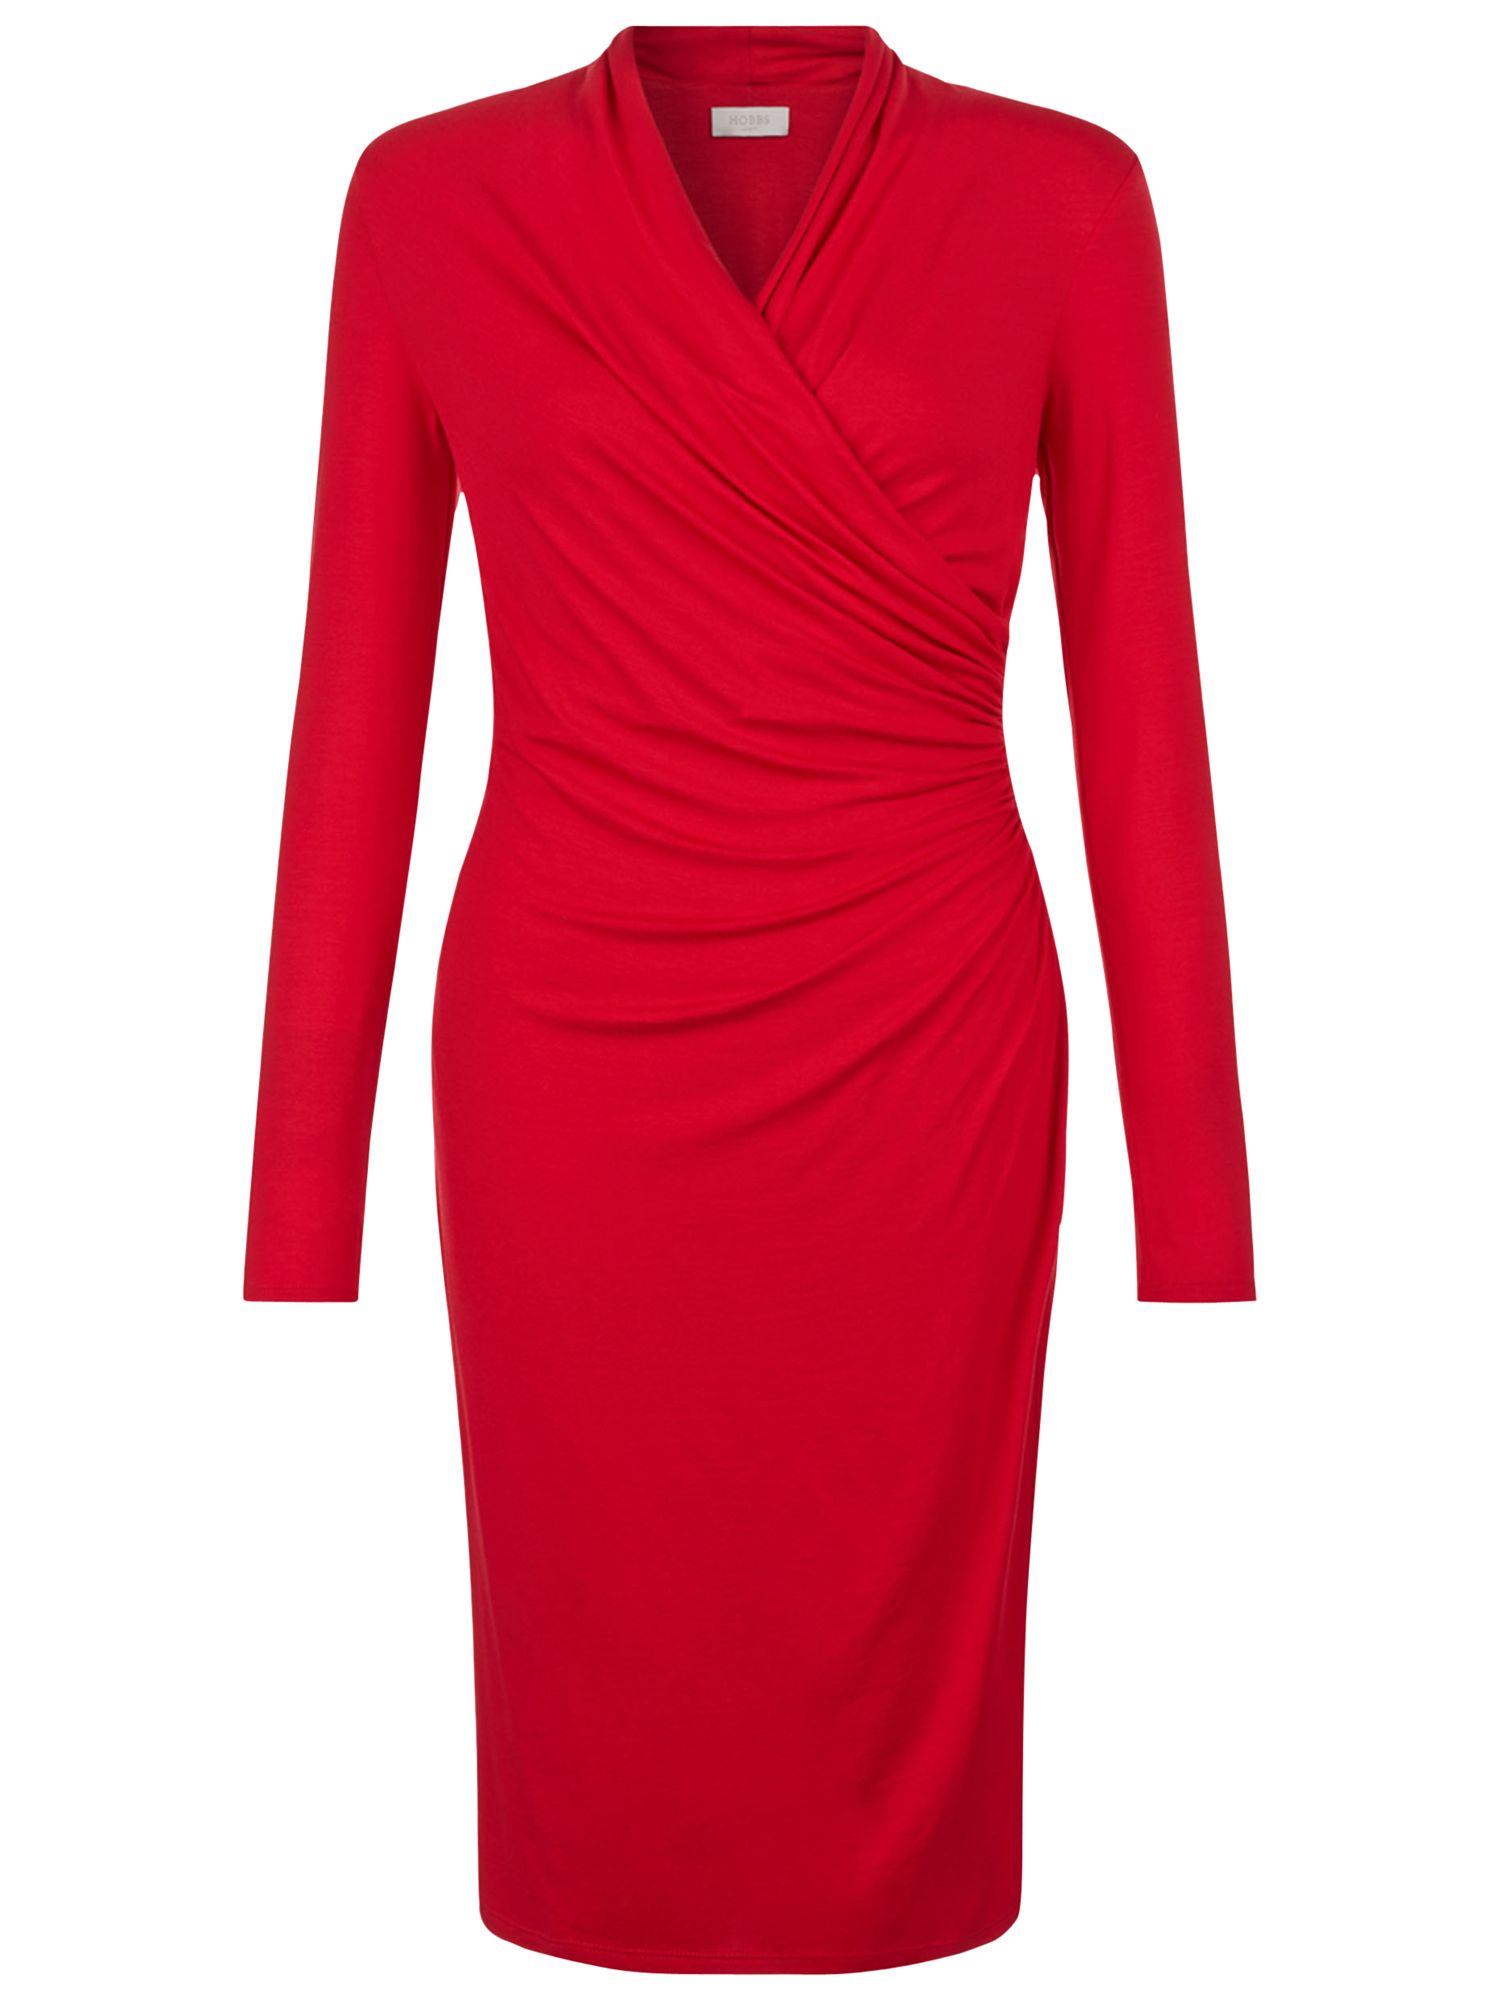 Hobbs Laine Dress, Red